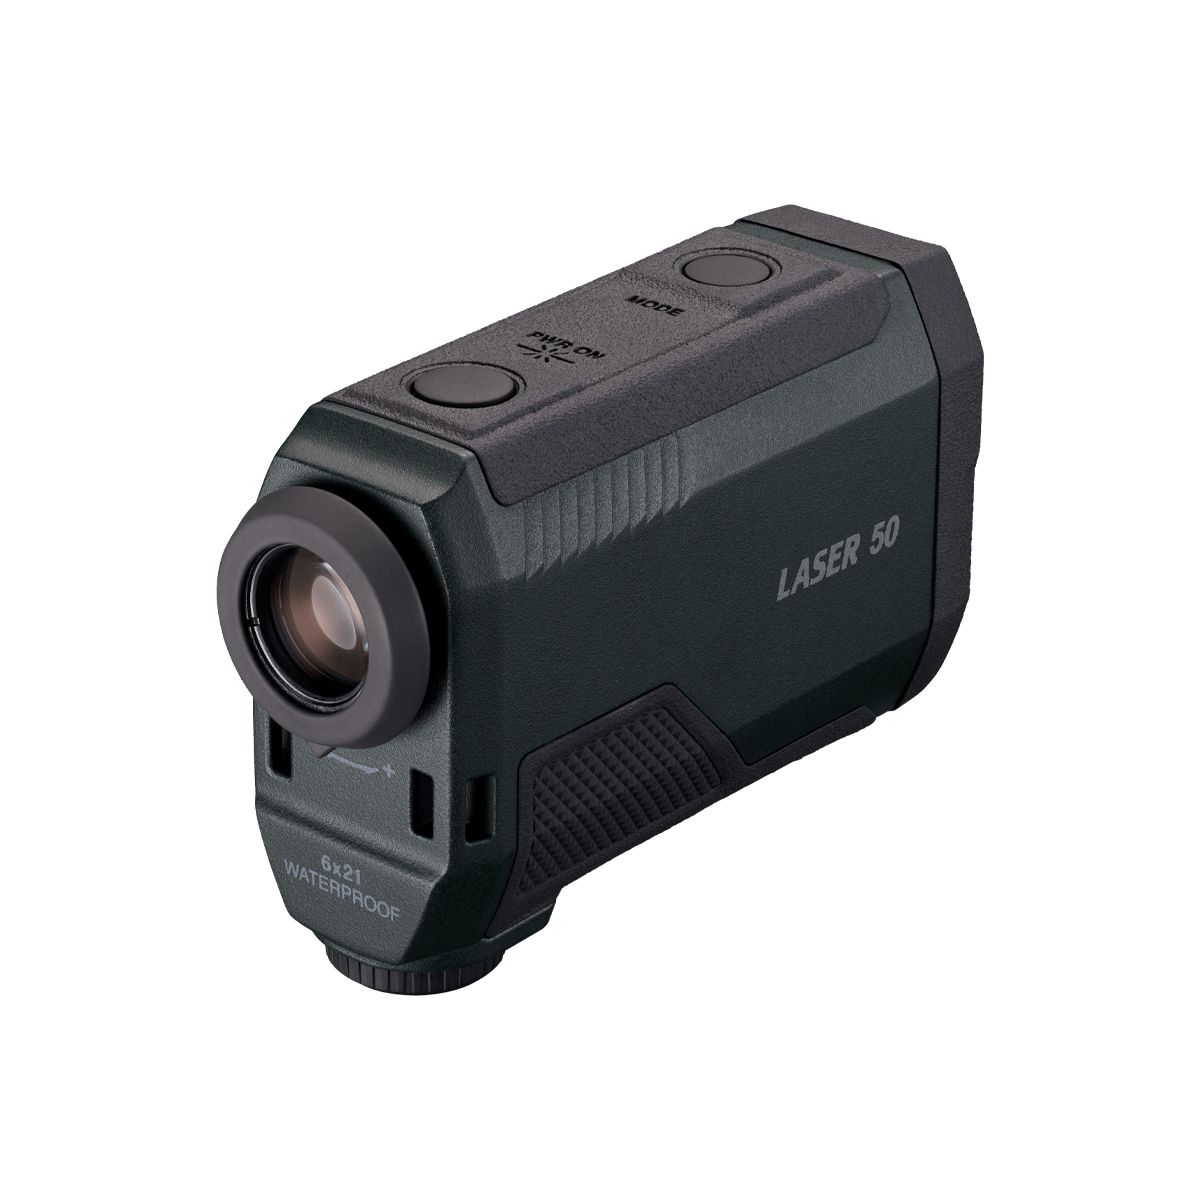 Nikon Laser 50 Entfernungsmesser